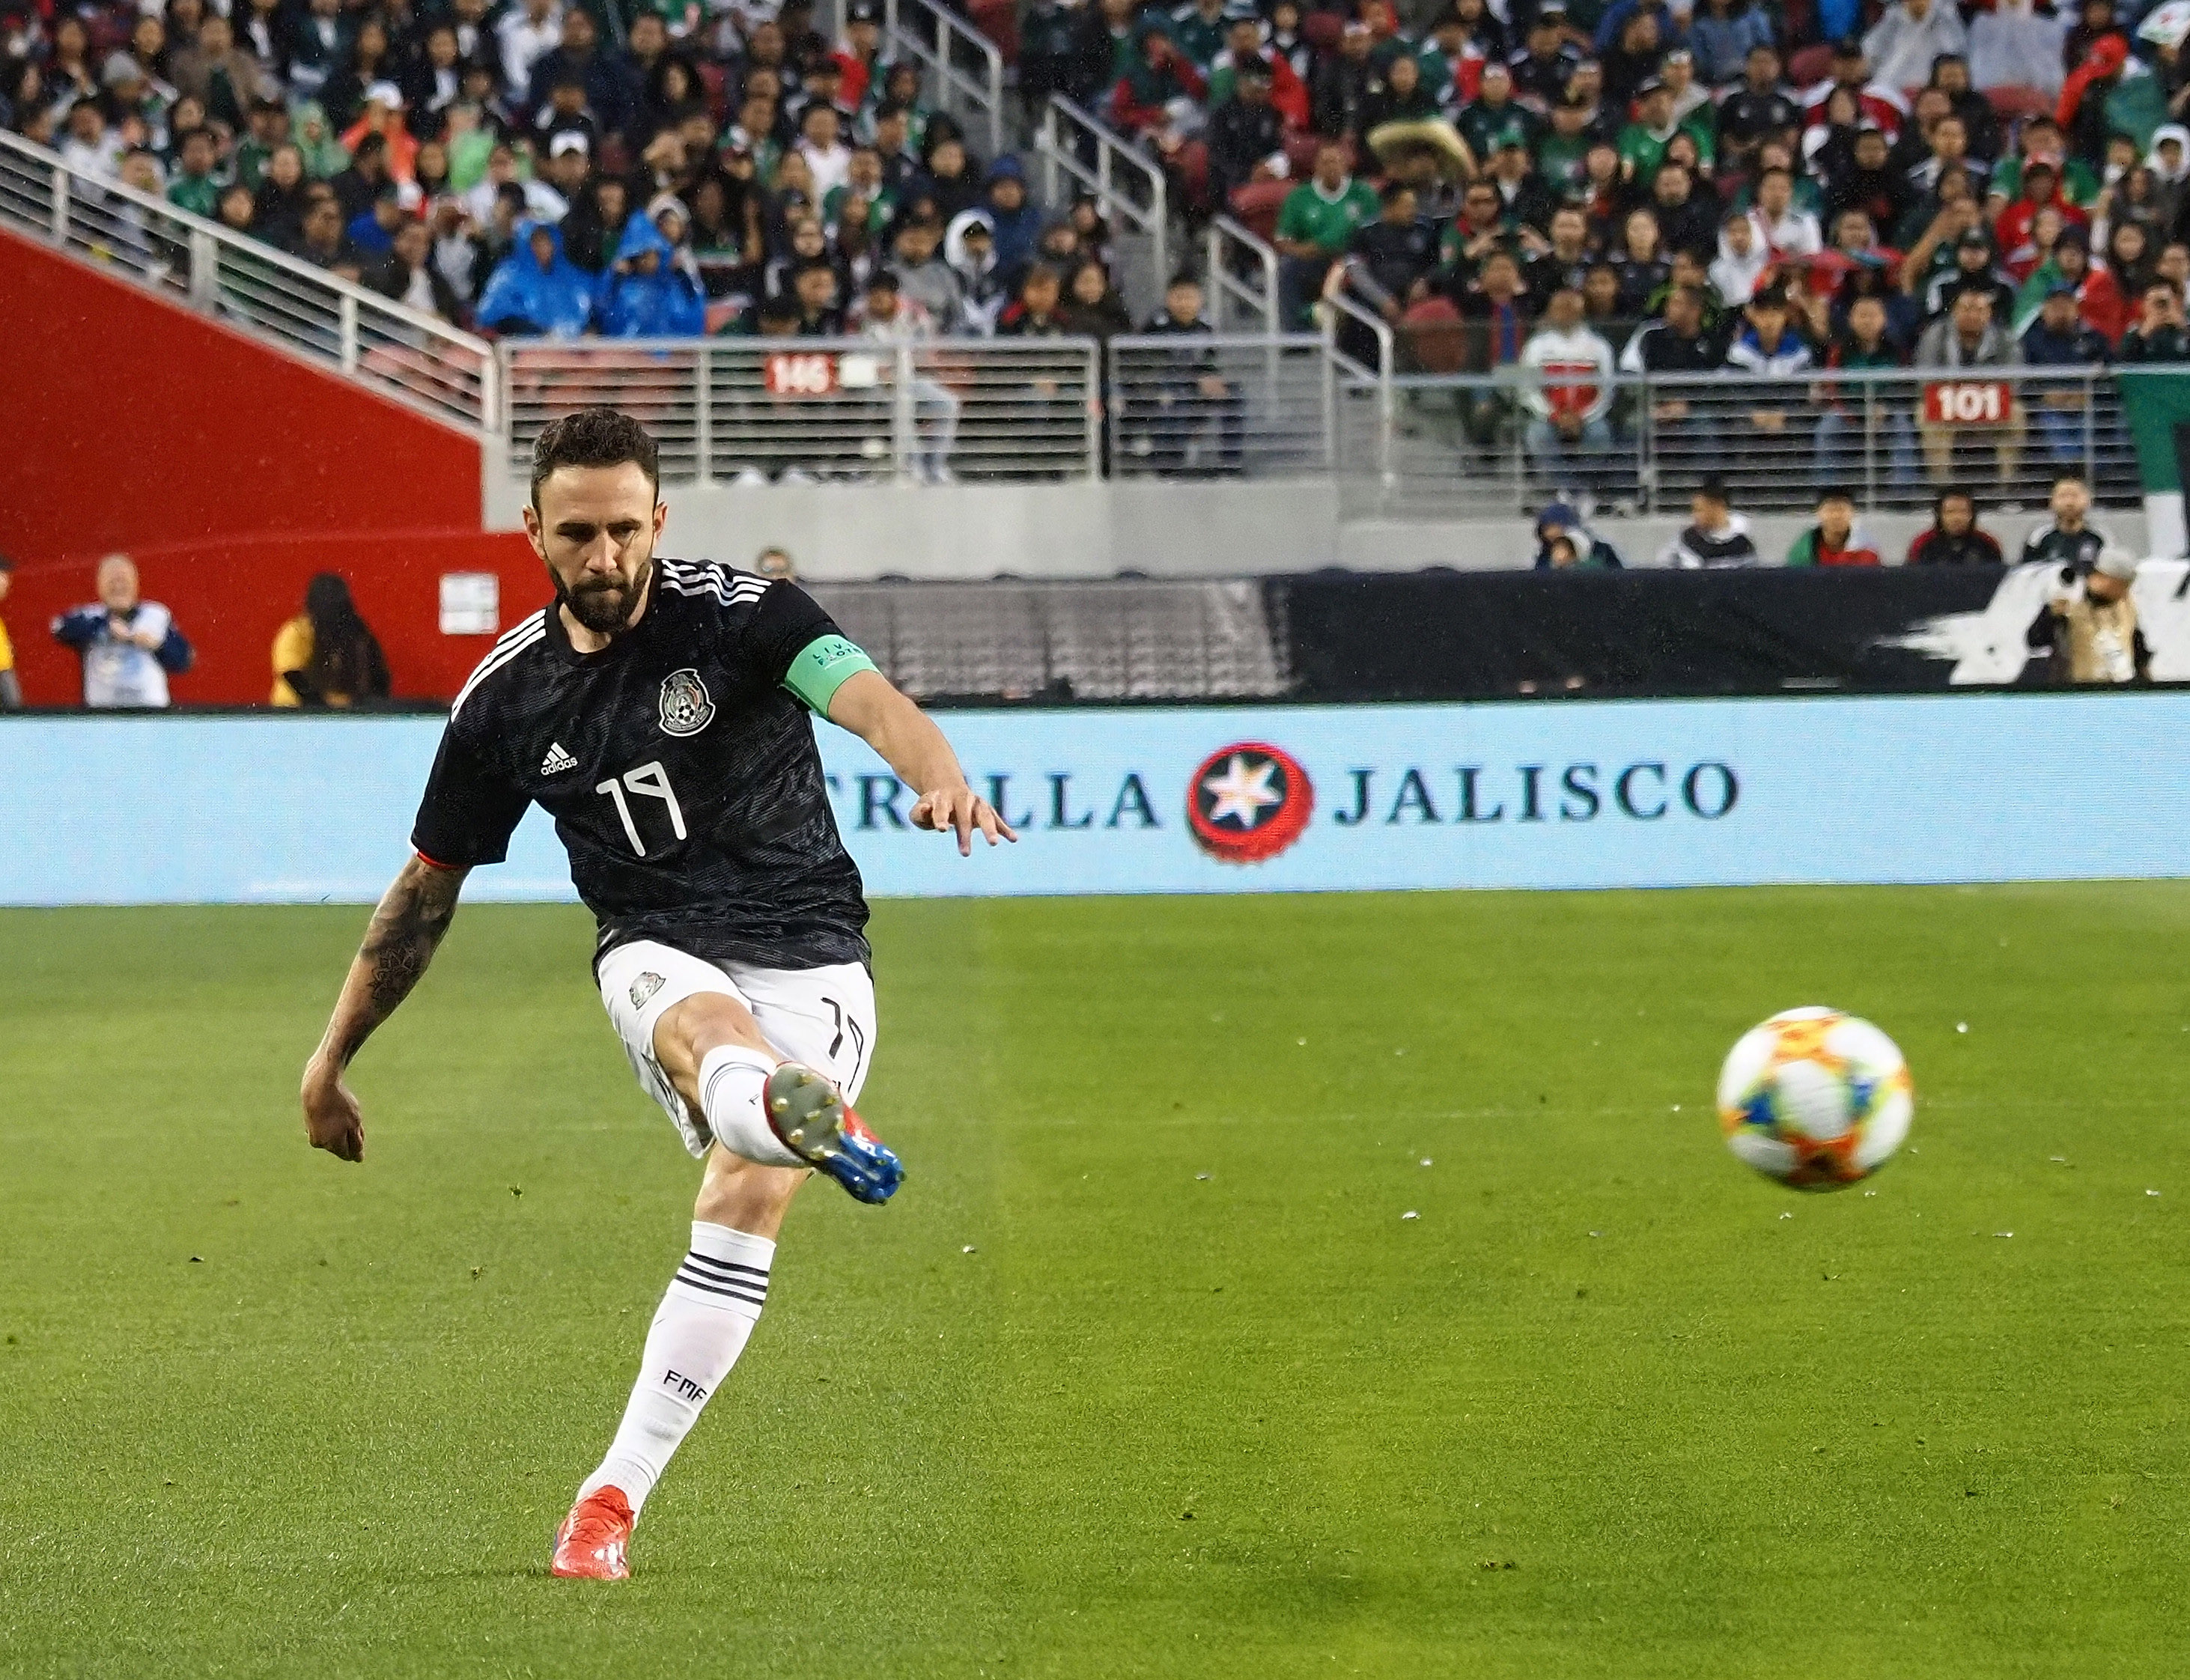 Mar 26, 2019; Santa Clara, CA, USA; Mexico defender Miguel Layun (19) kicks the ball against Paraguay during the first half at Levi's Stadium. Mandatory Credit: Kelley L Cox-USA TODAY Sports